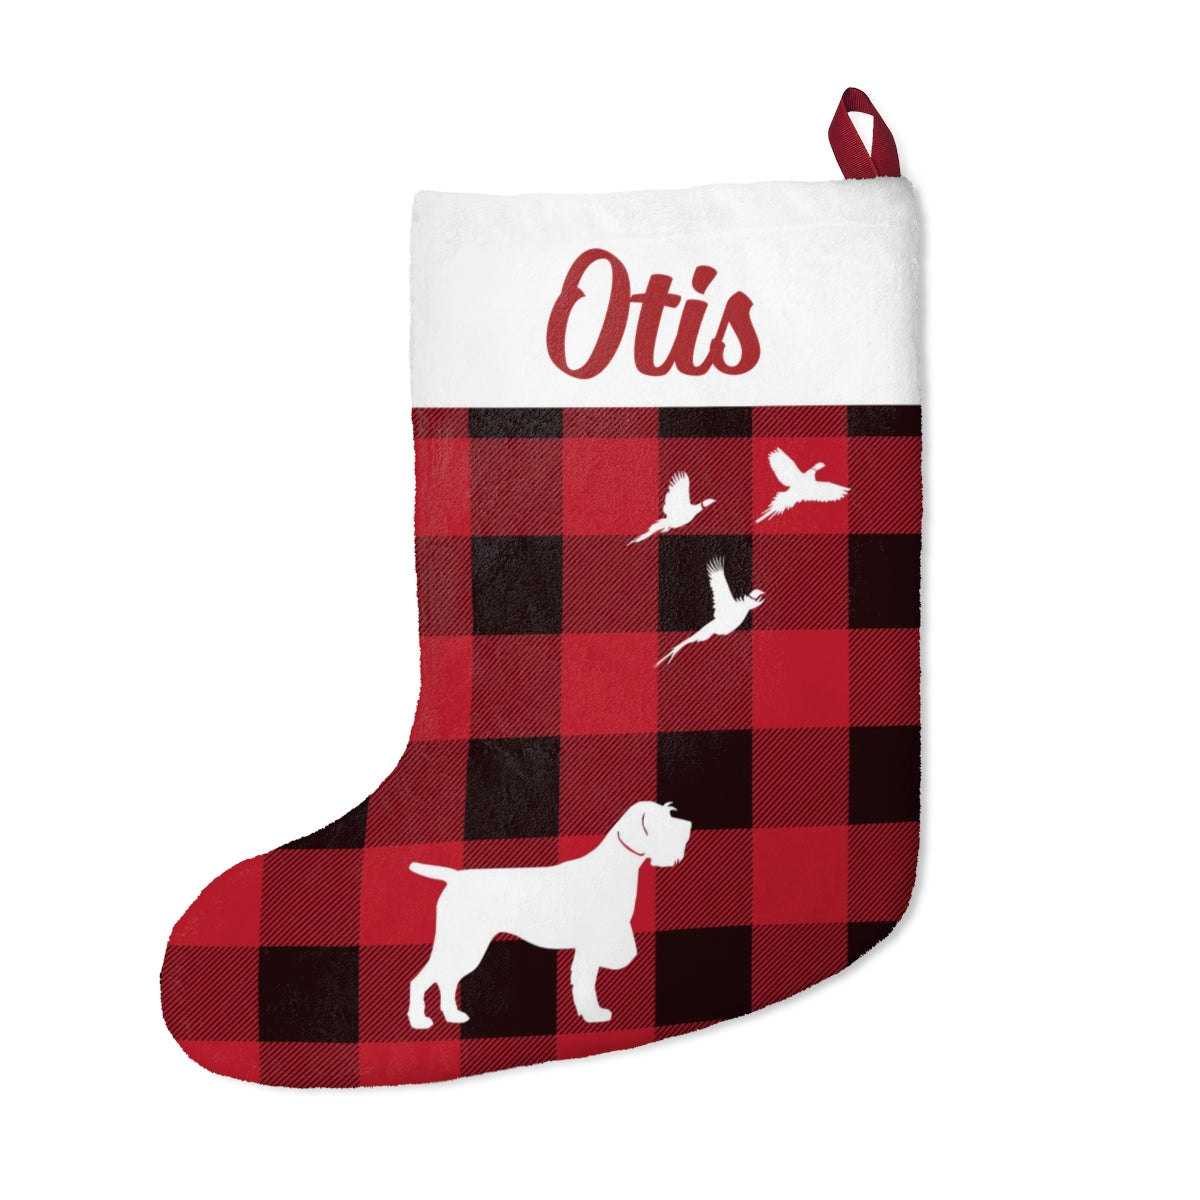 Otis Christmas Stockings